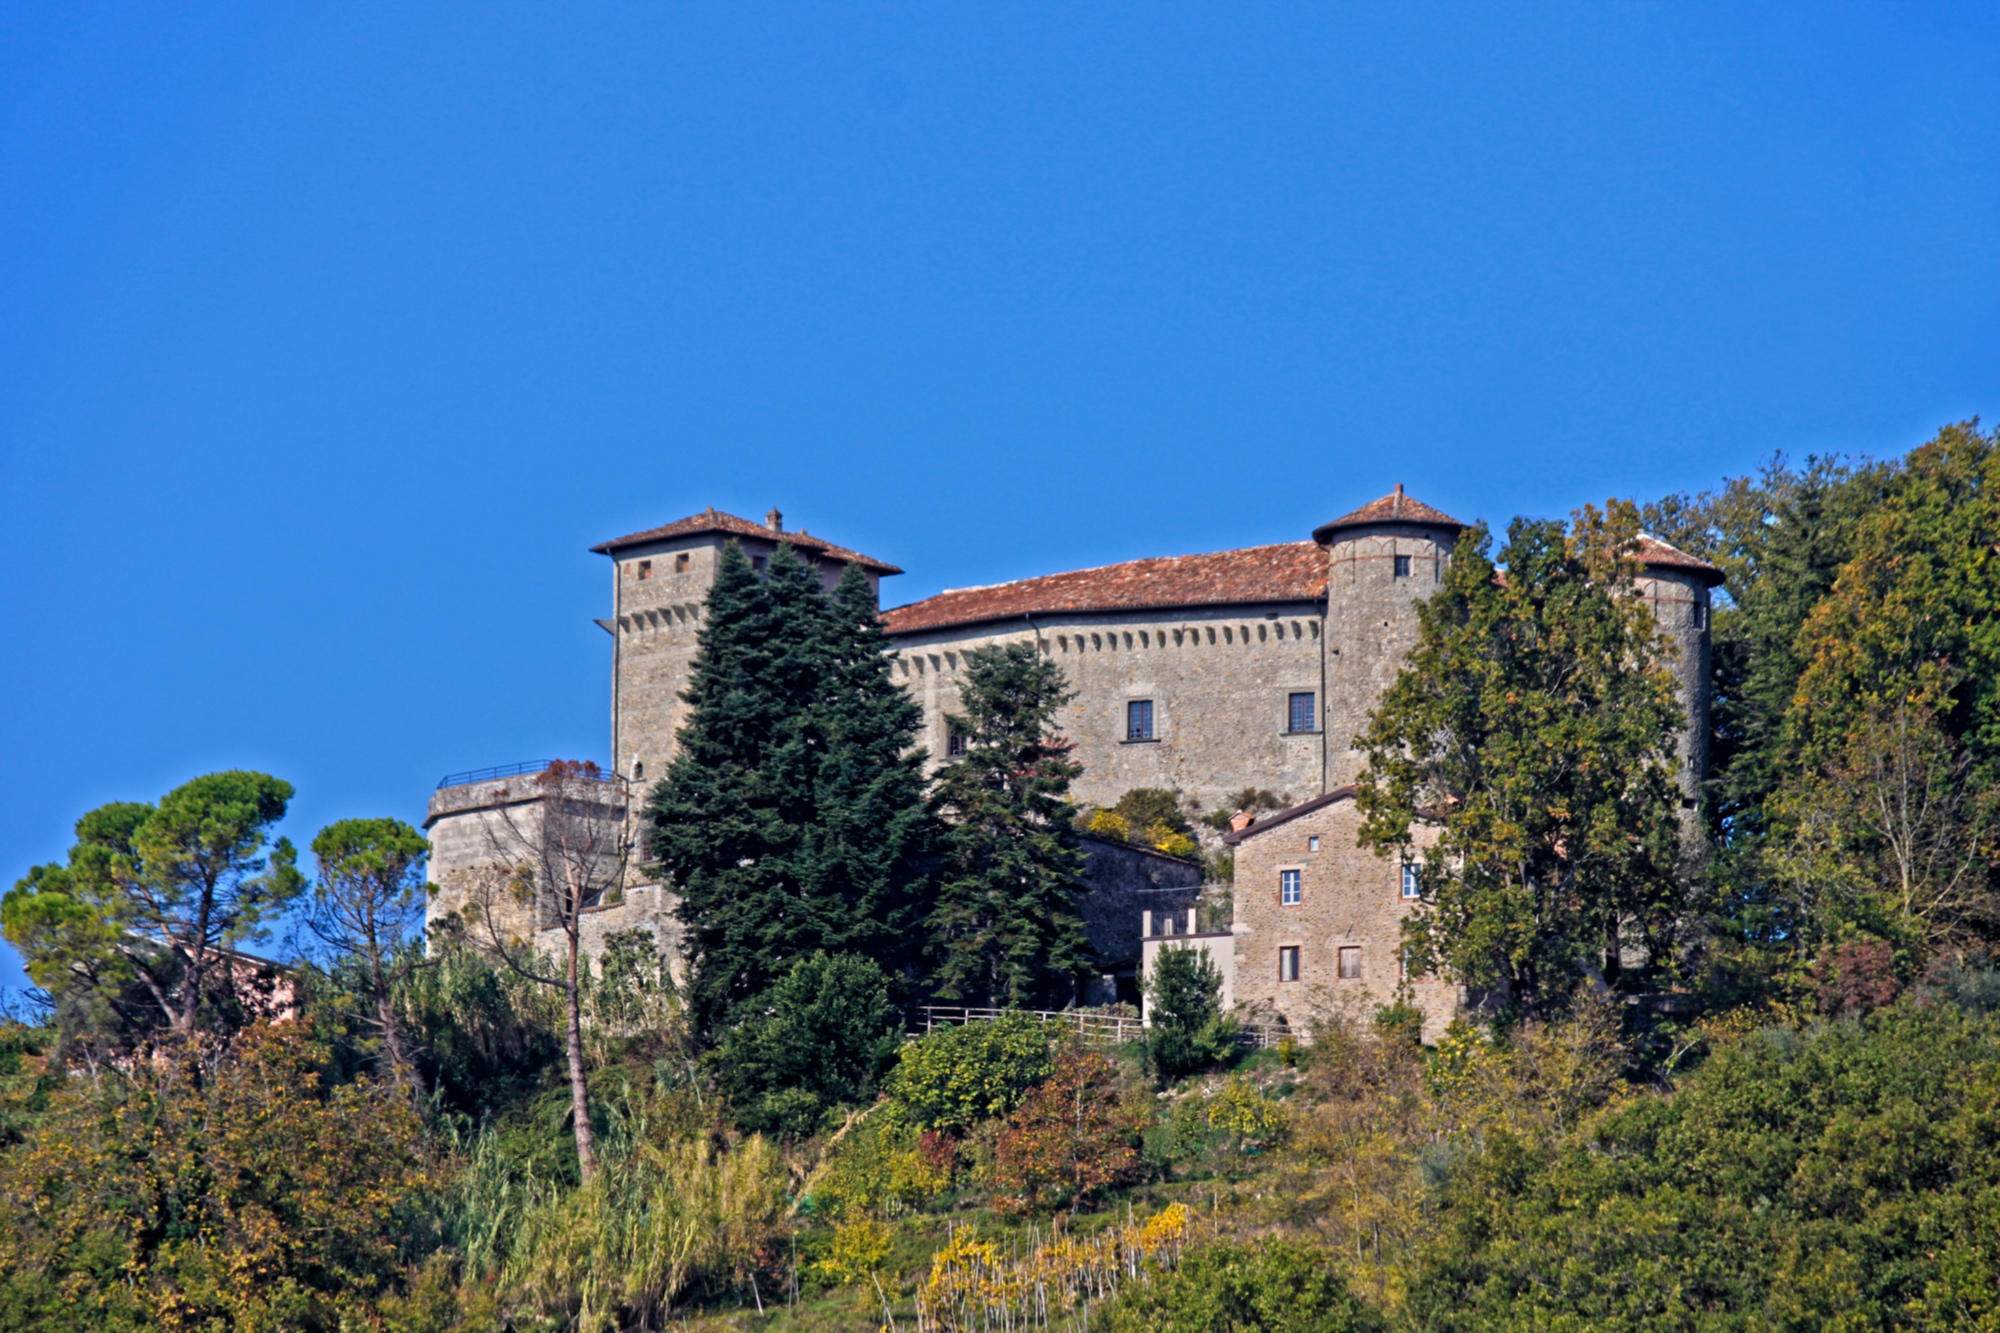 The Malaspina Castle of Monti - Licciana Nardi